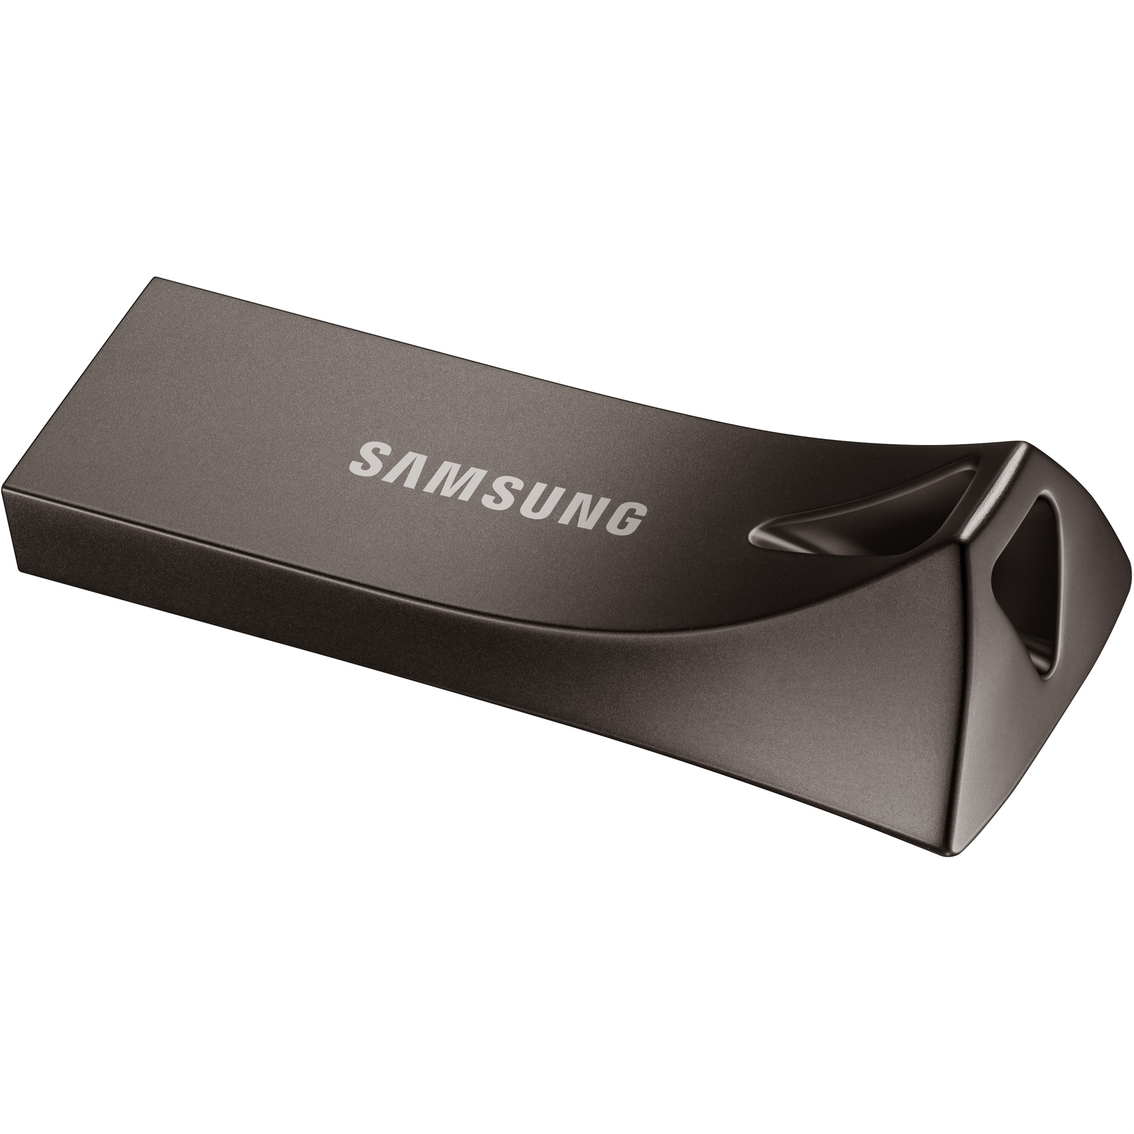 Samsung BAR Plus 64GB USB 3.1 Flash Drive - Image 2 of 3